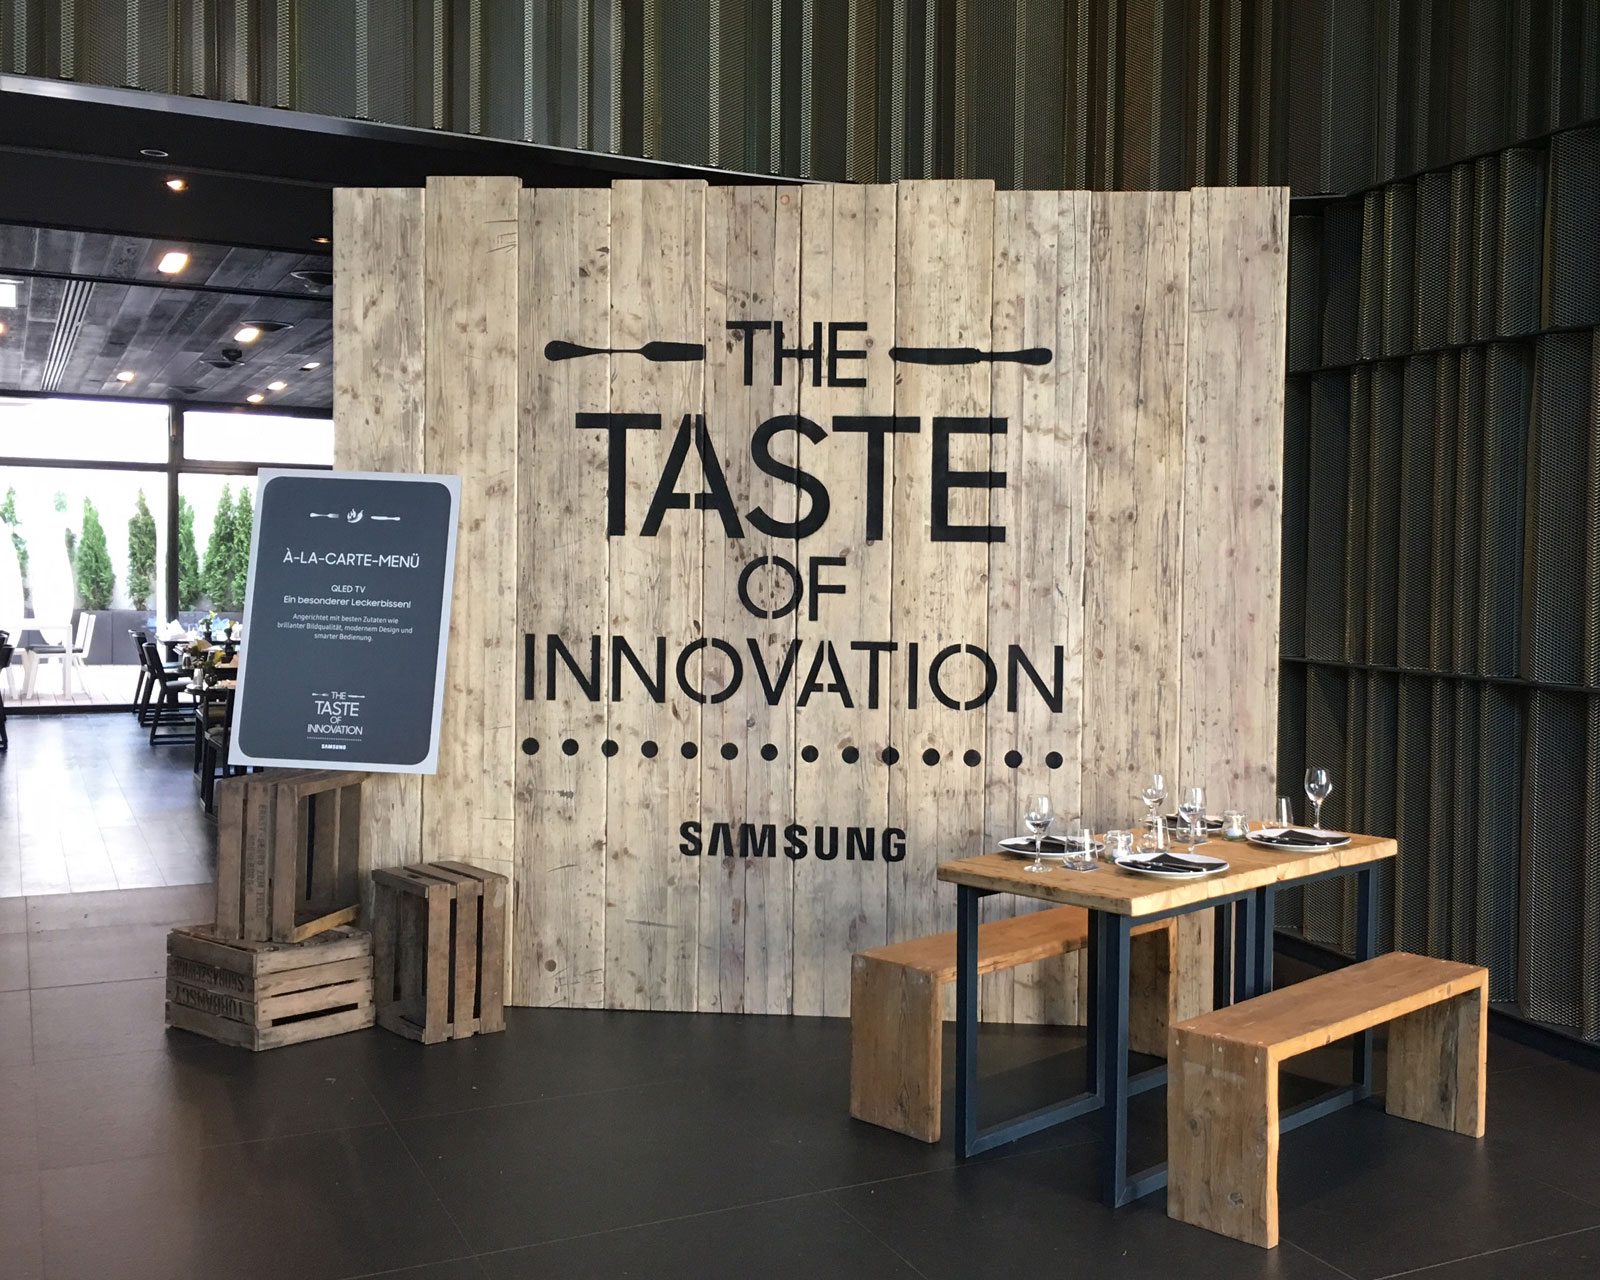 Samsung Event - a taste of Innovation